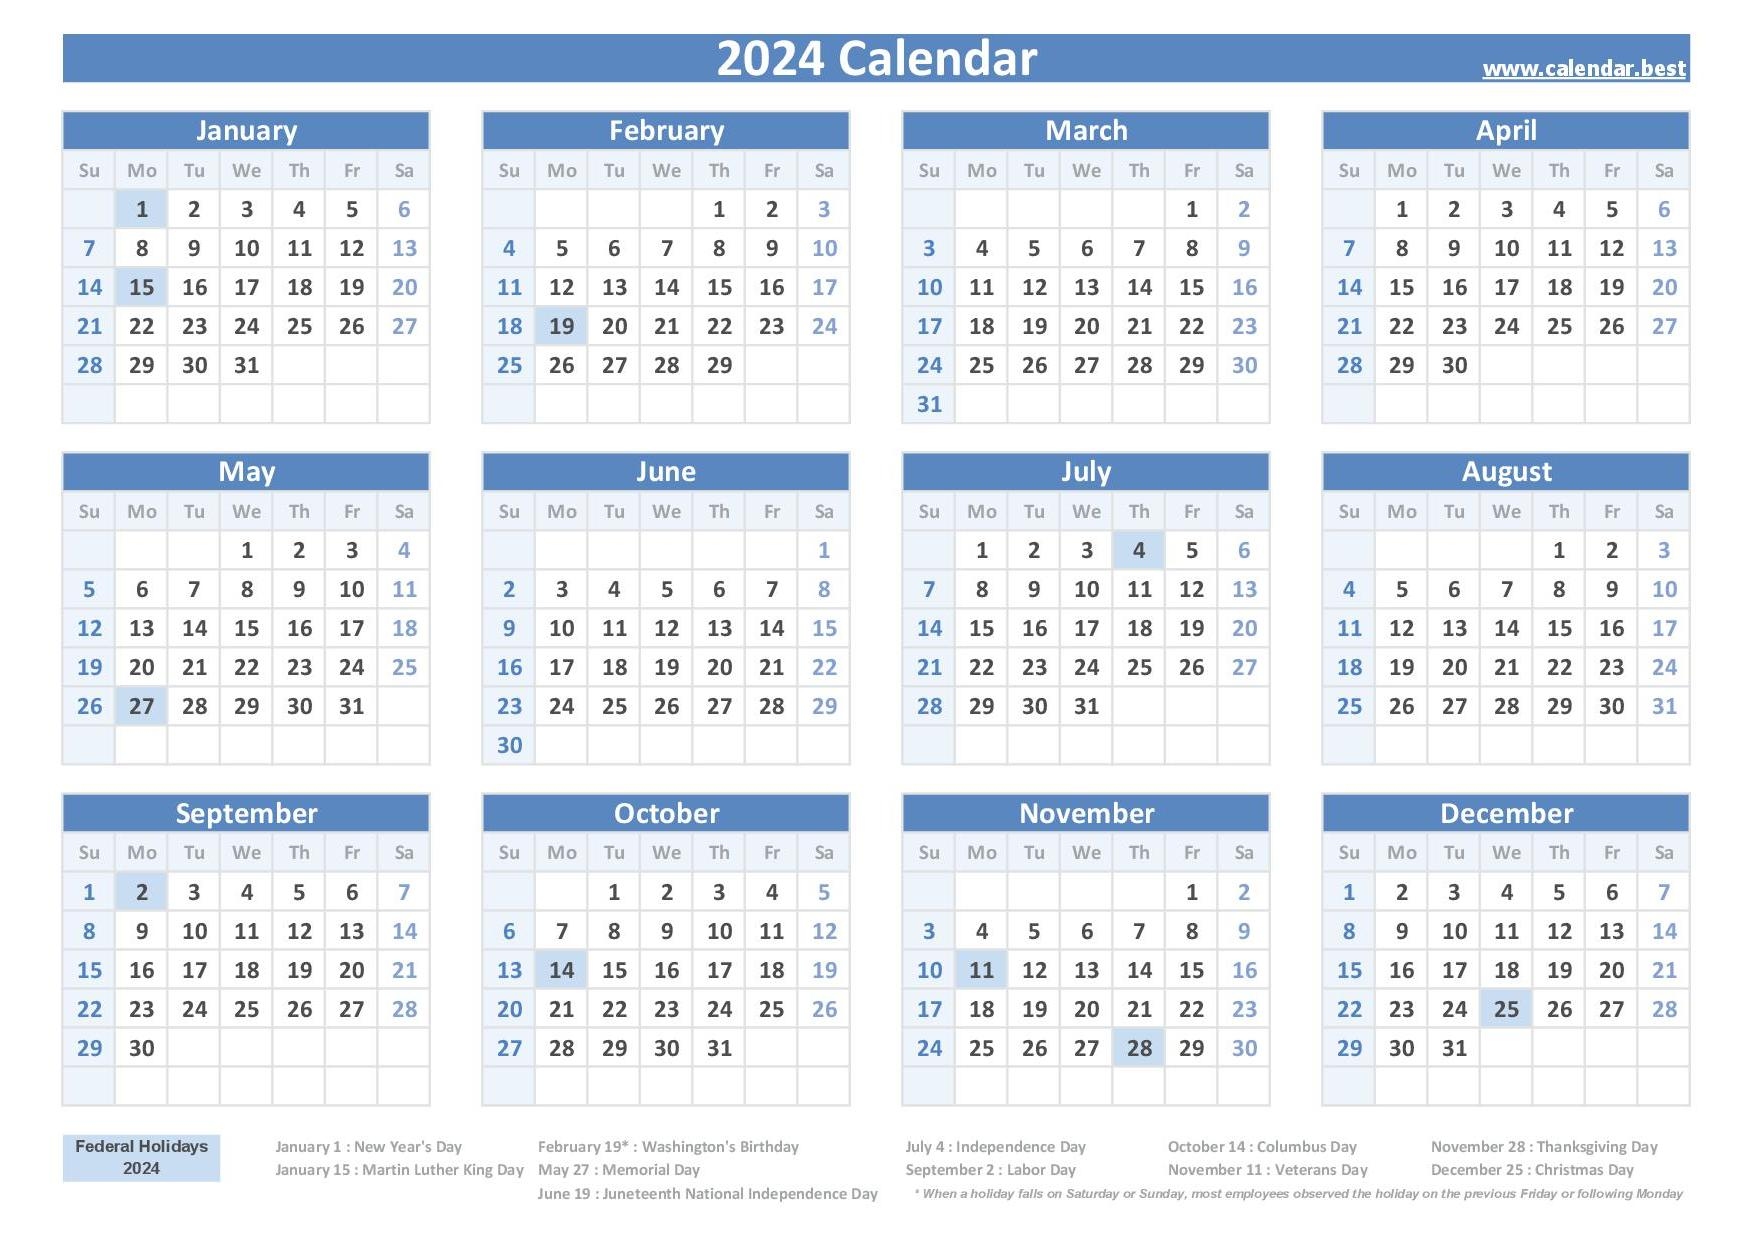 2024 Us Federal Holiday Calendar Printable Bill Marjie - Free Printable 2024 Calendar With Holidays And Notes